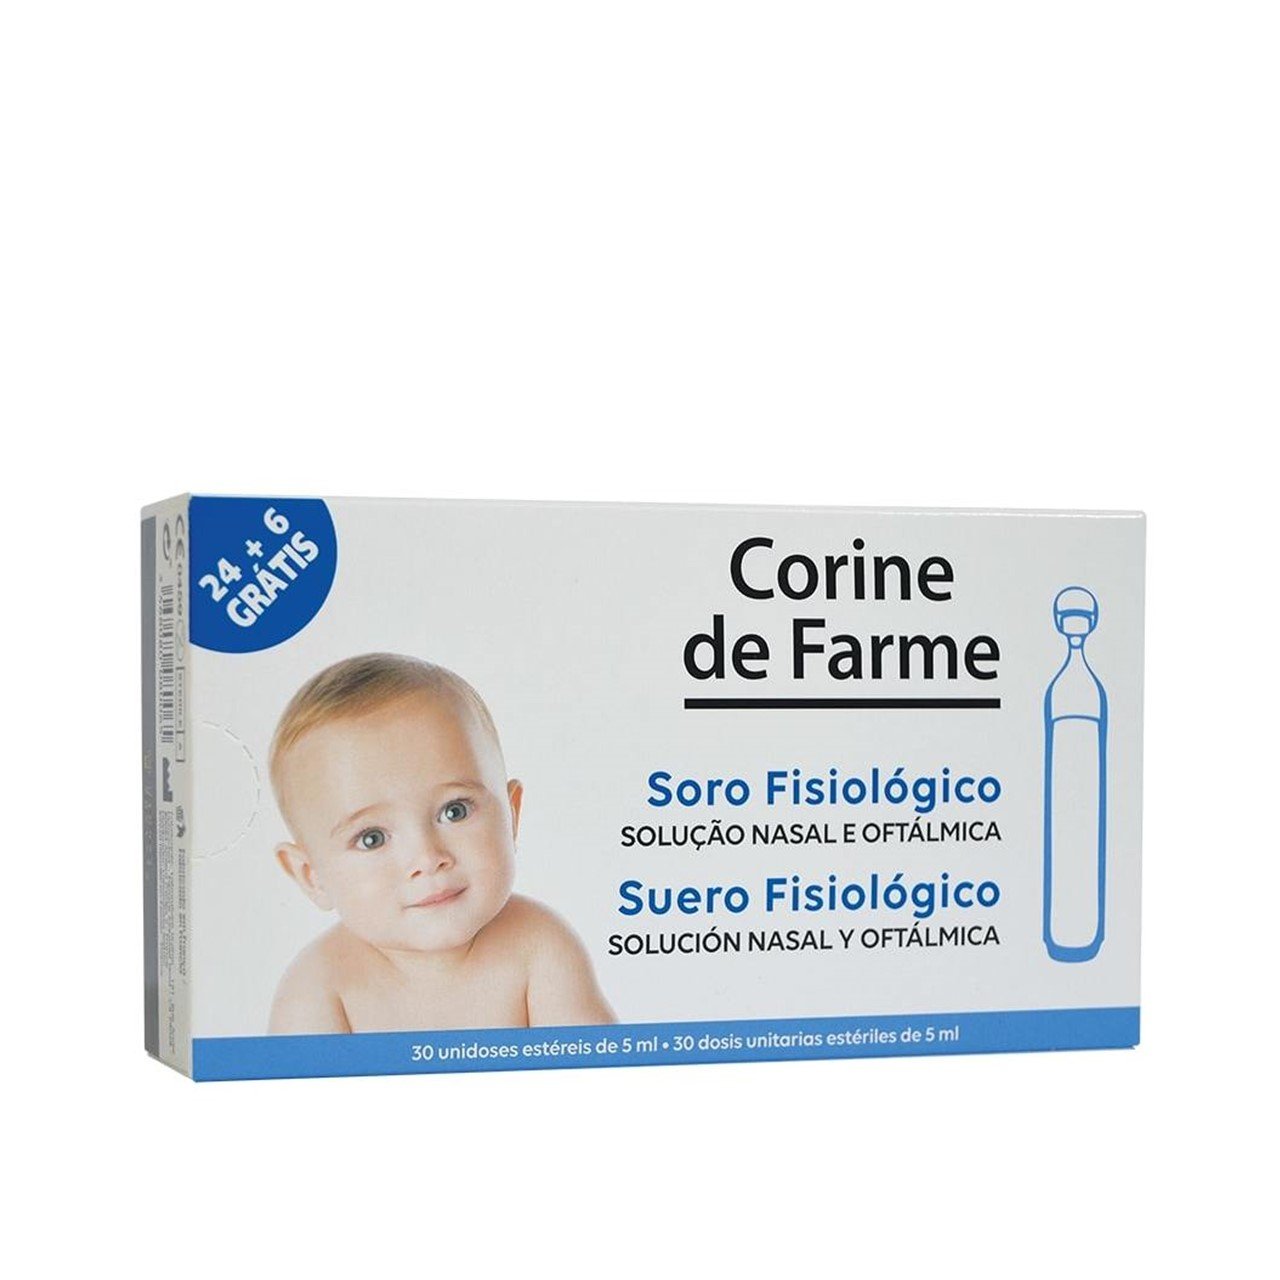 Corine de Farme Physiological Saline Solution 5ml x30 (0.17floz x30)